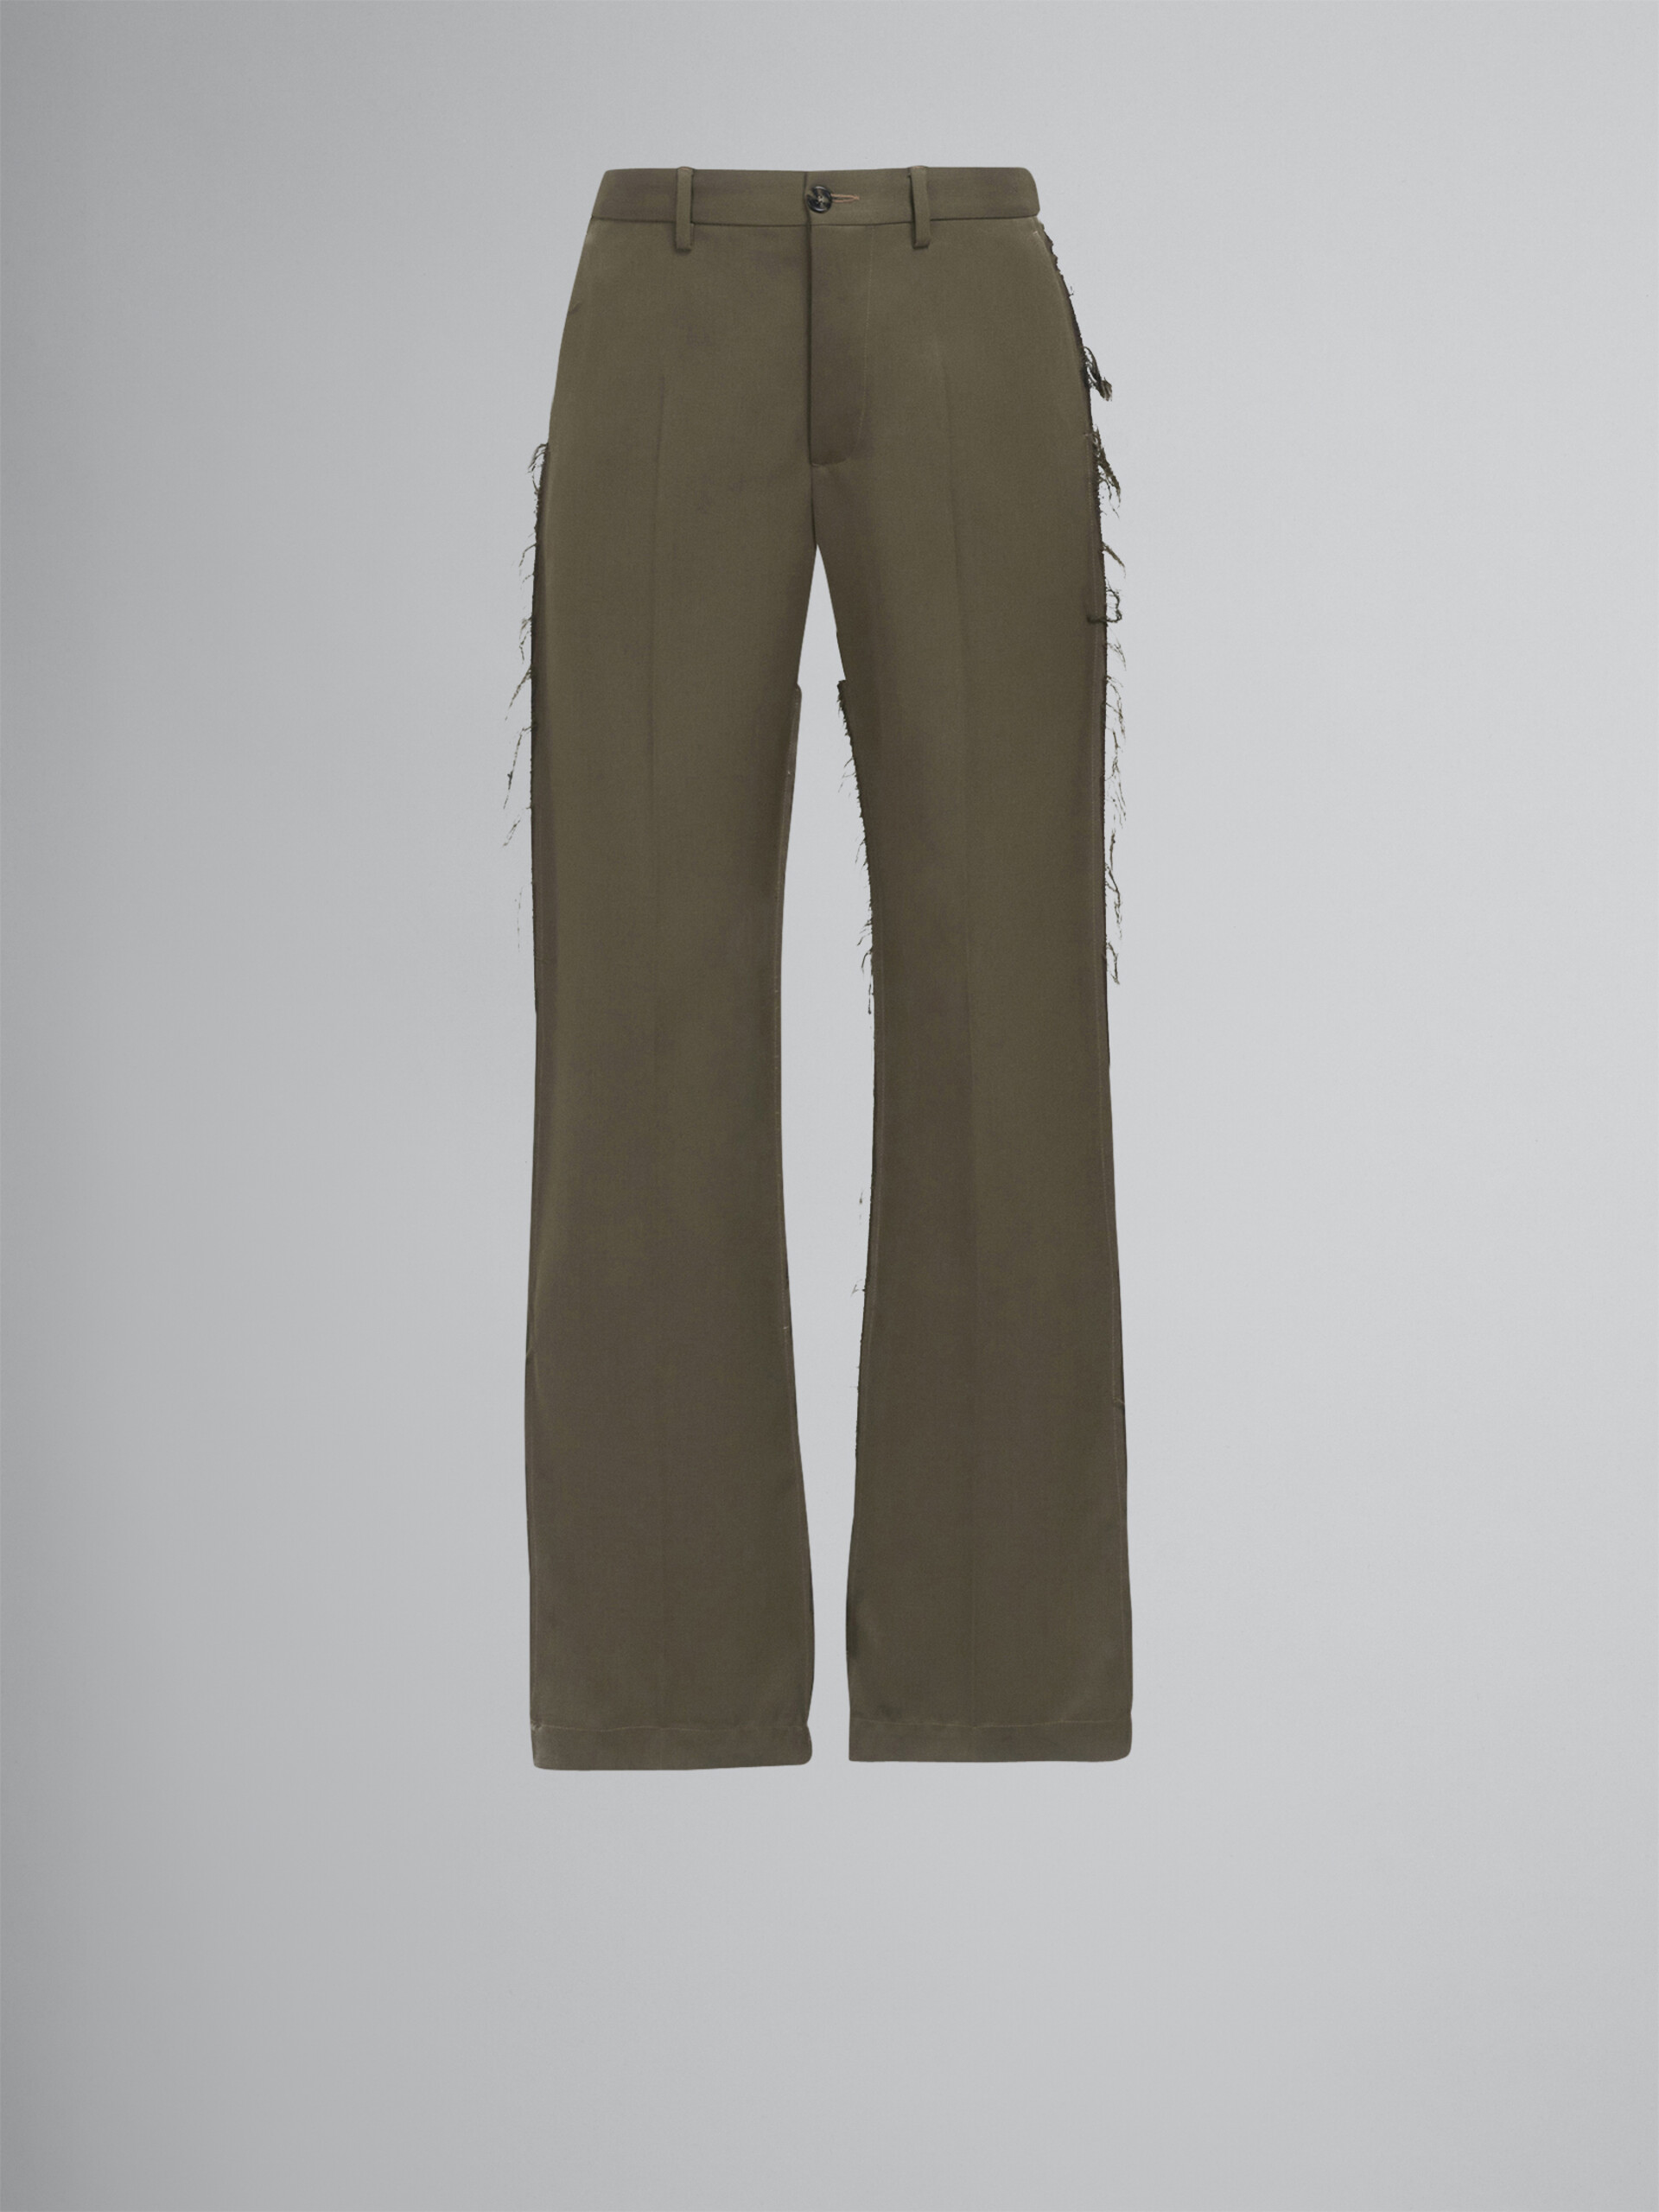 Green gabardine wool pants - Pants - Image 1